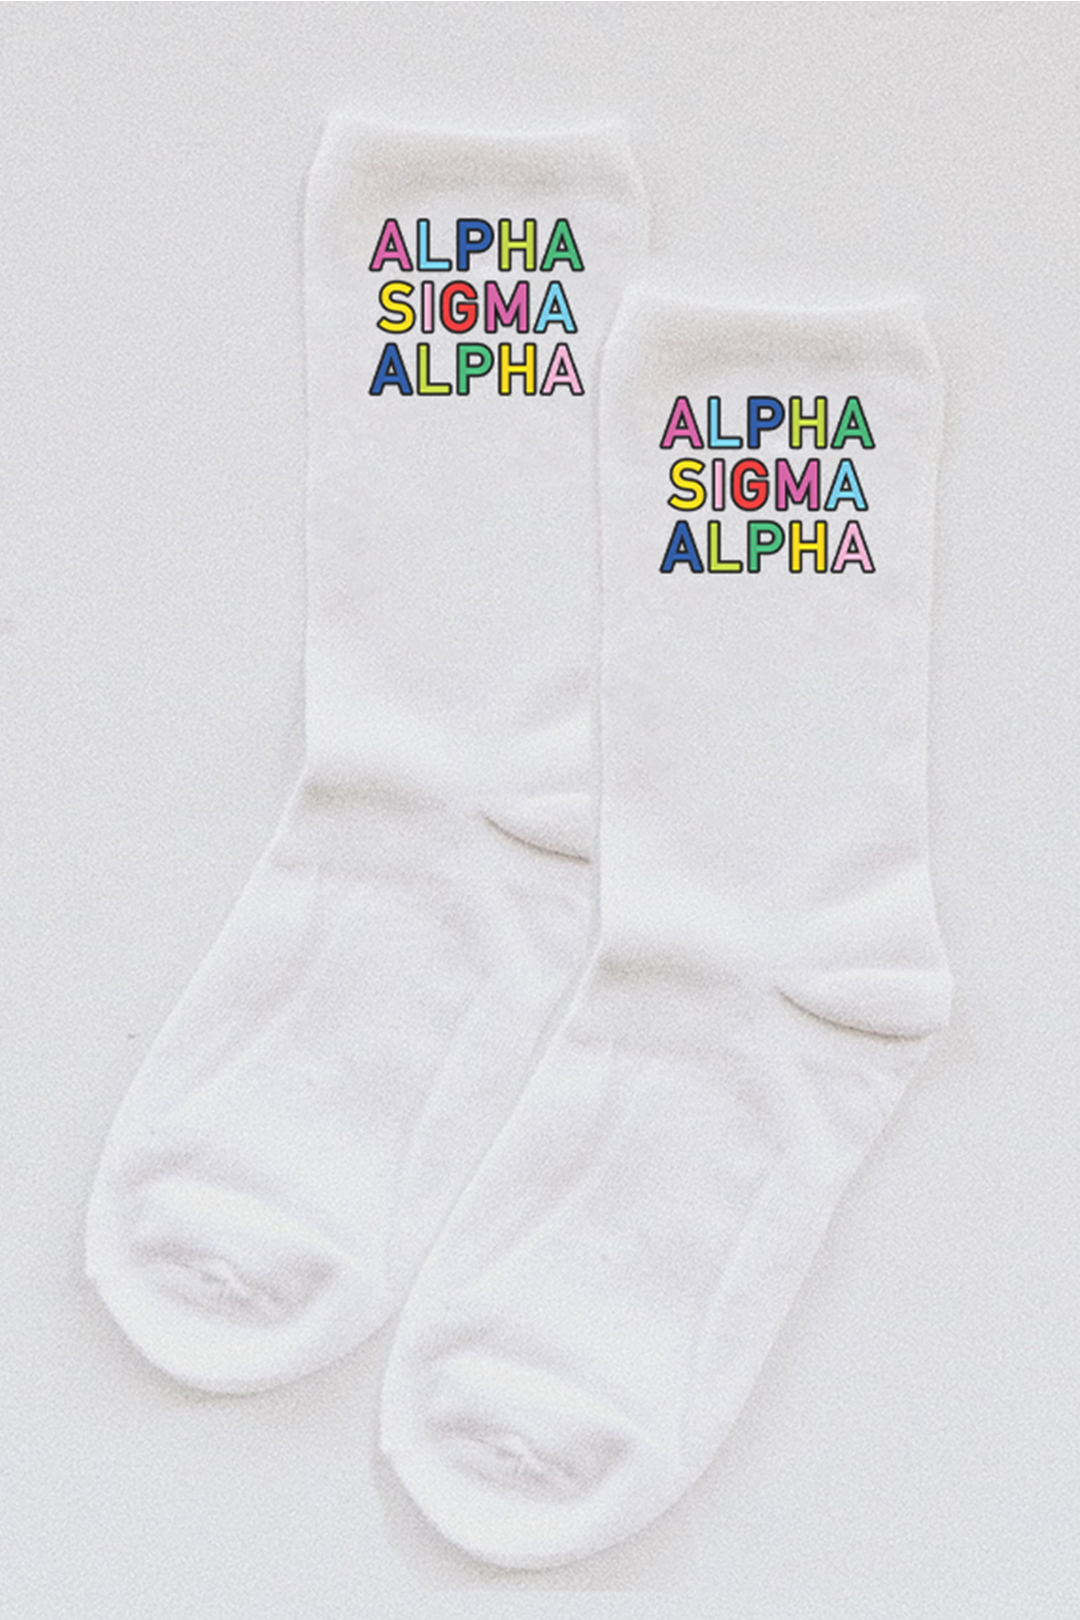 Colorful socks - Alpha Sigma Alpha